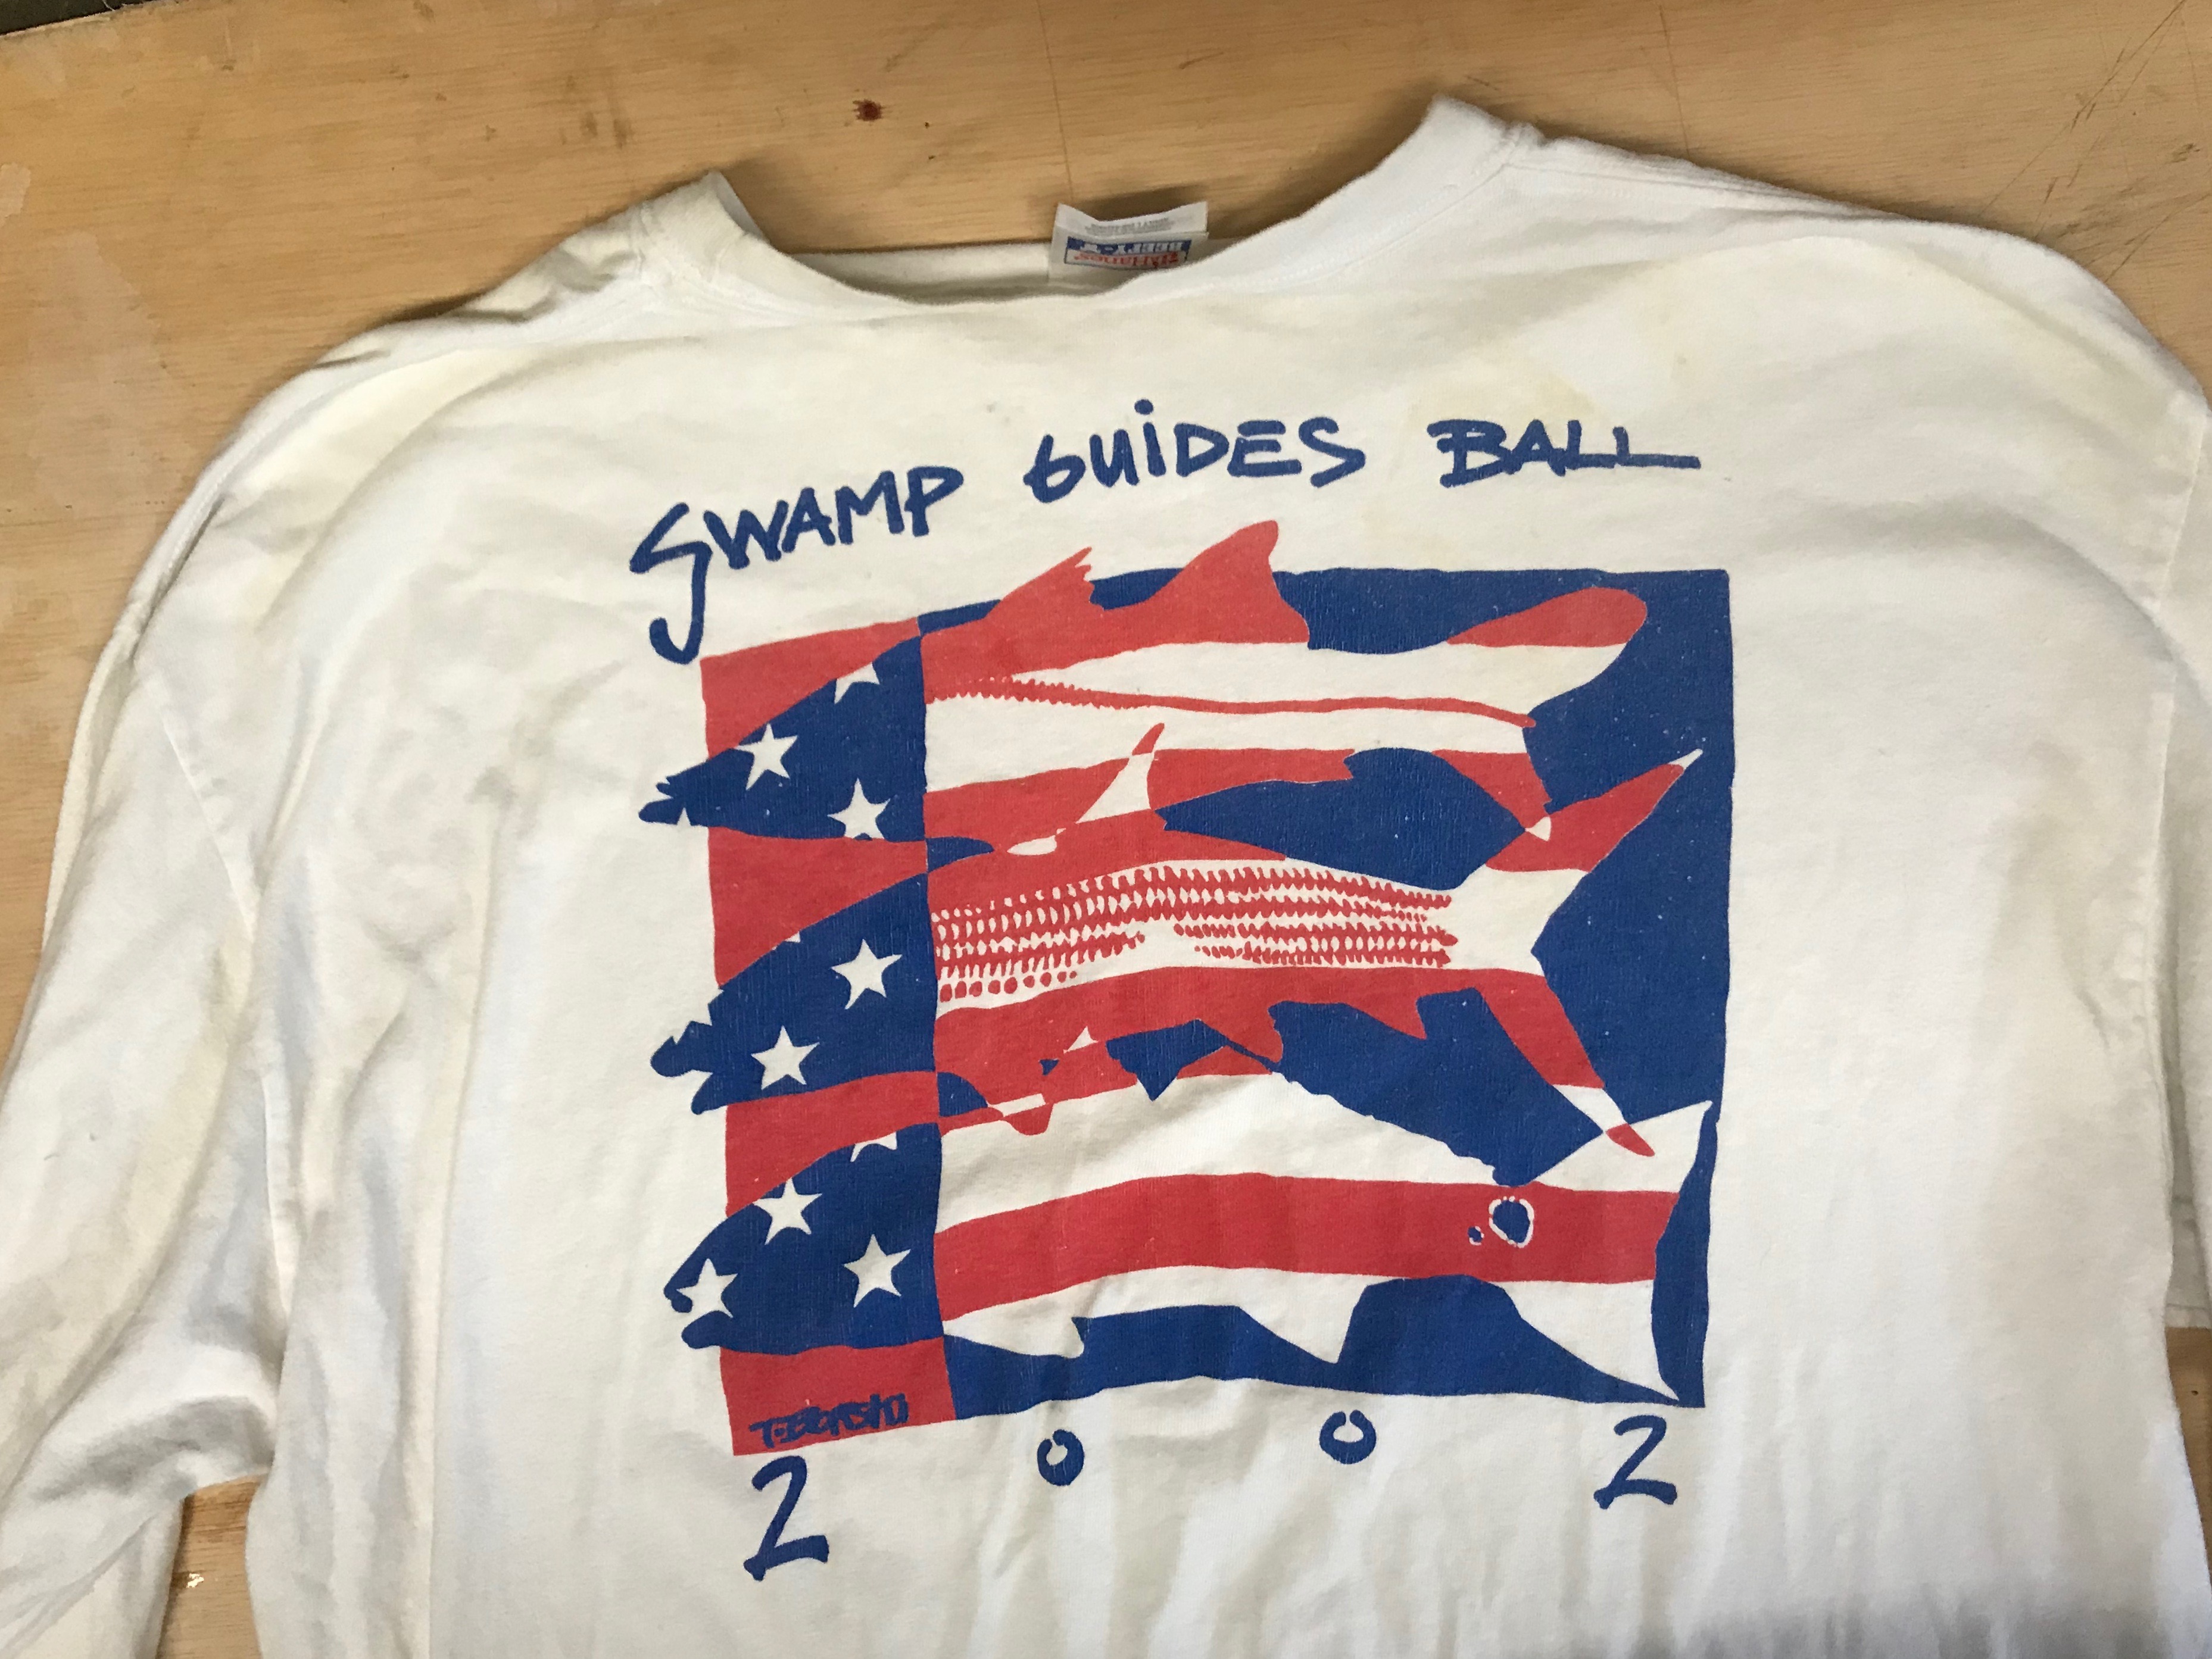 Seeking Prior Swamp Guides Ball T-Shirts - Florida Keys Fishing Guides  Association